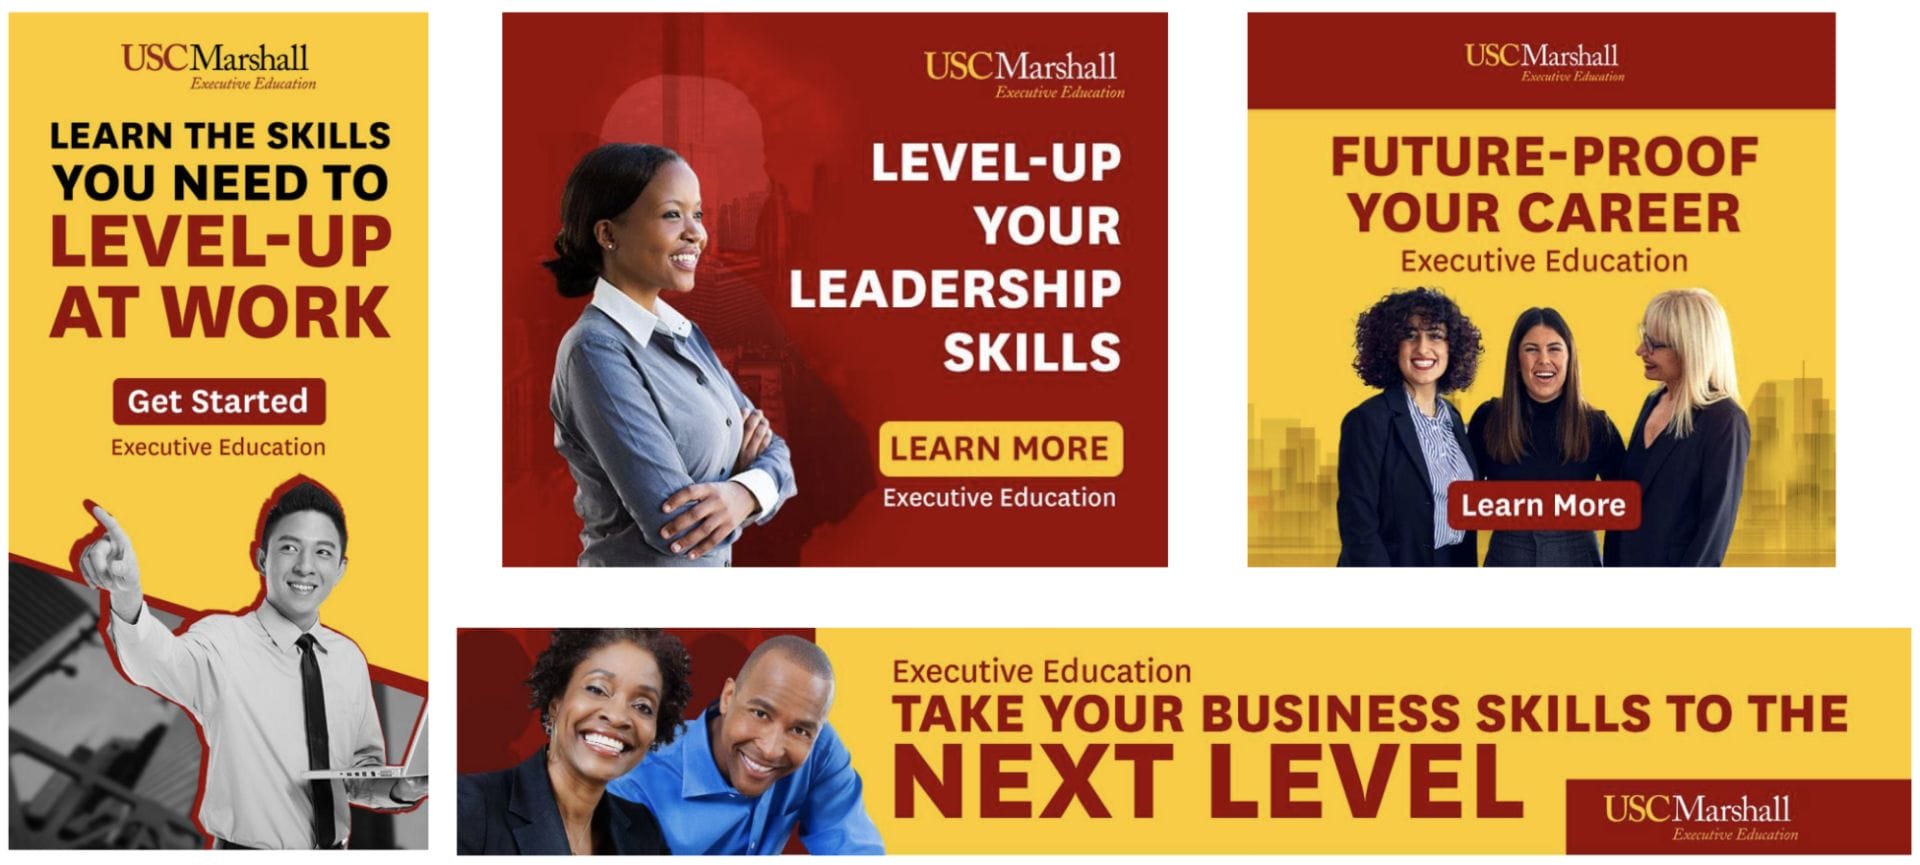 USC marshall paid media campaigns by digital delane